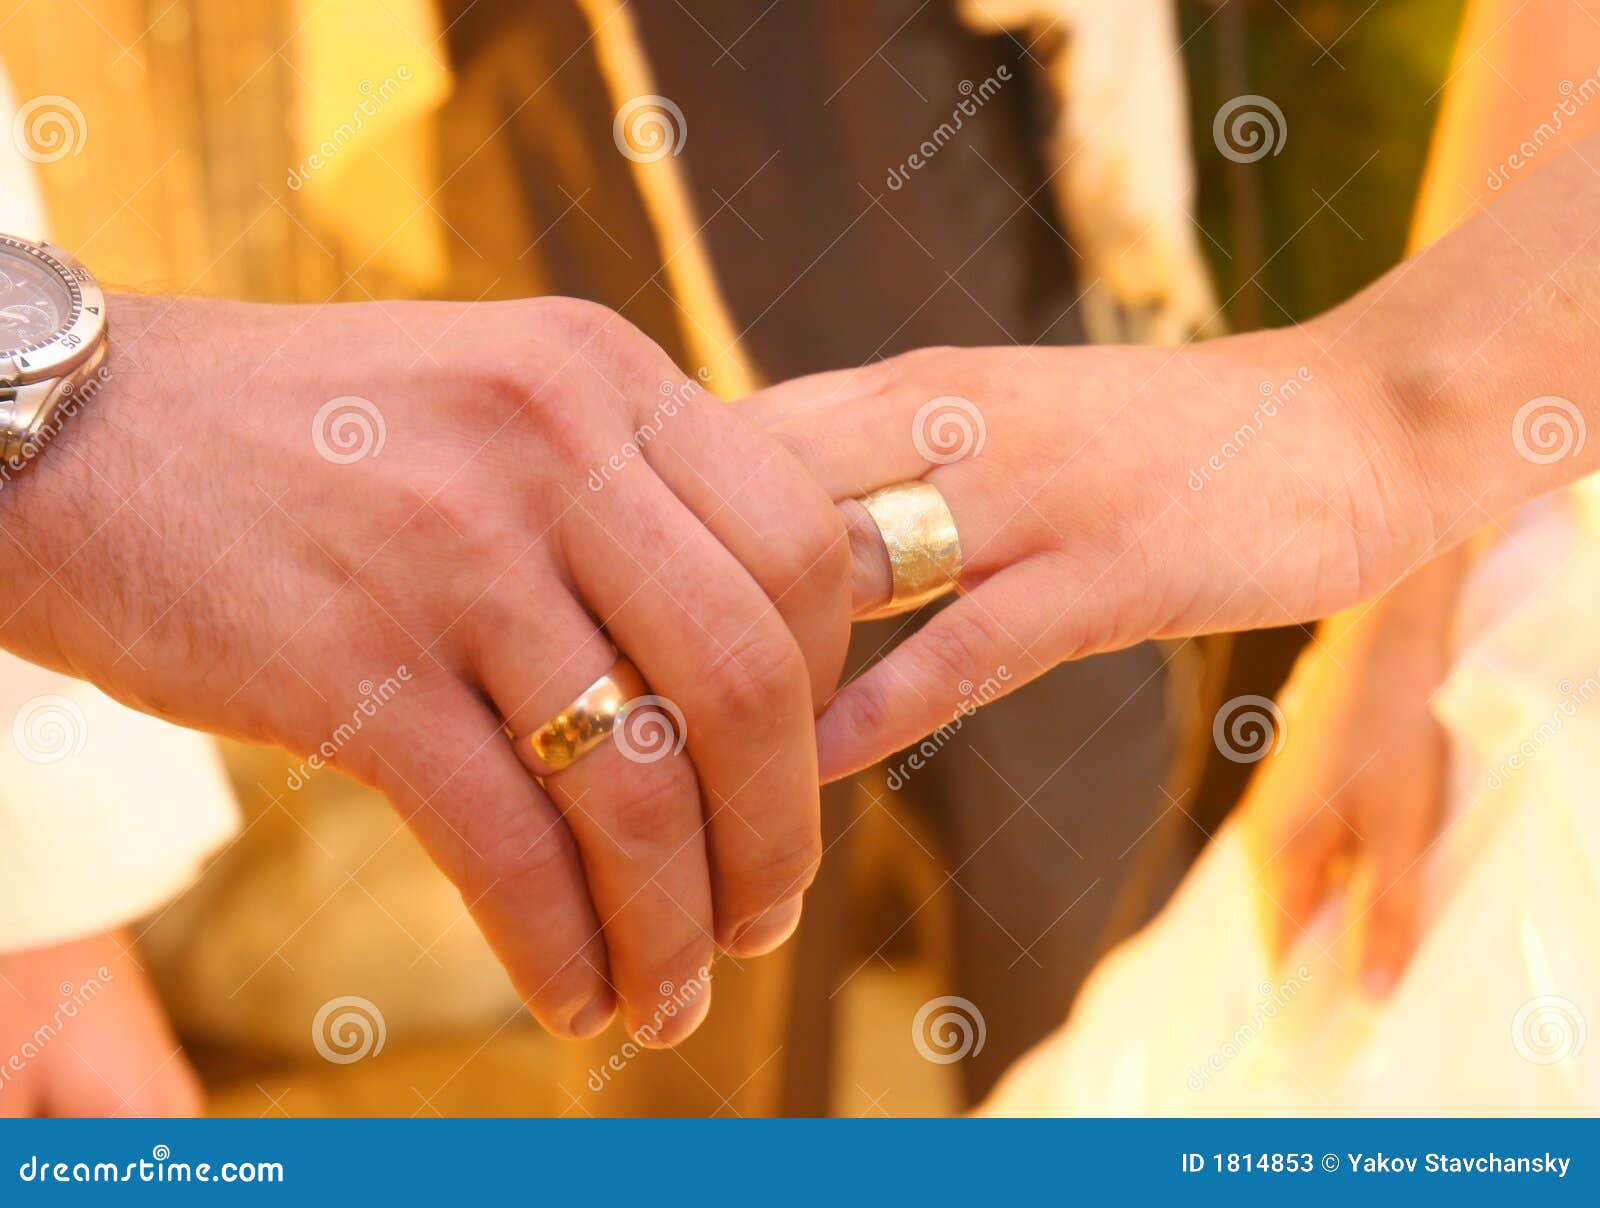 weddings rings with hands